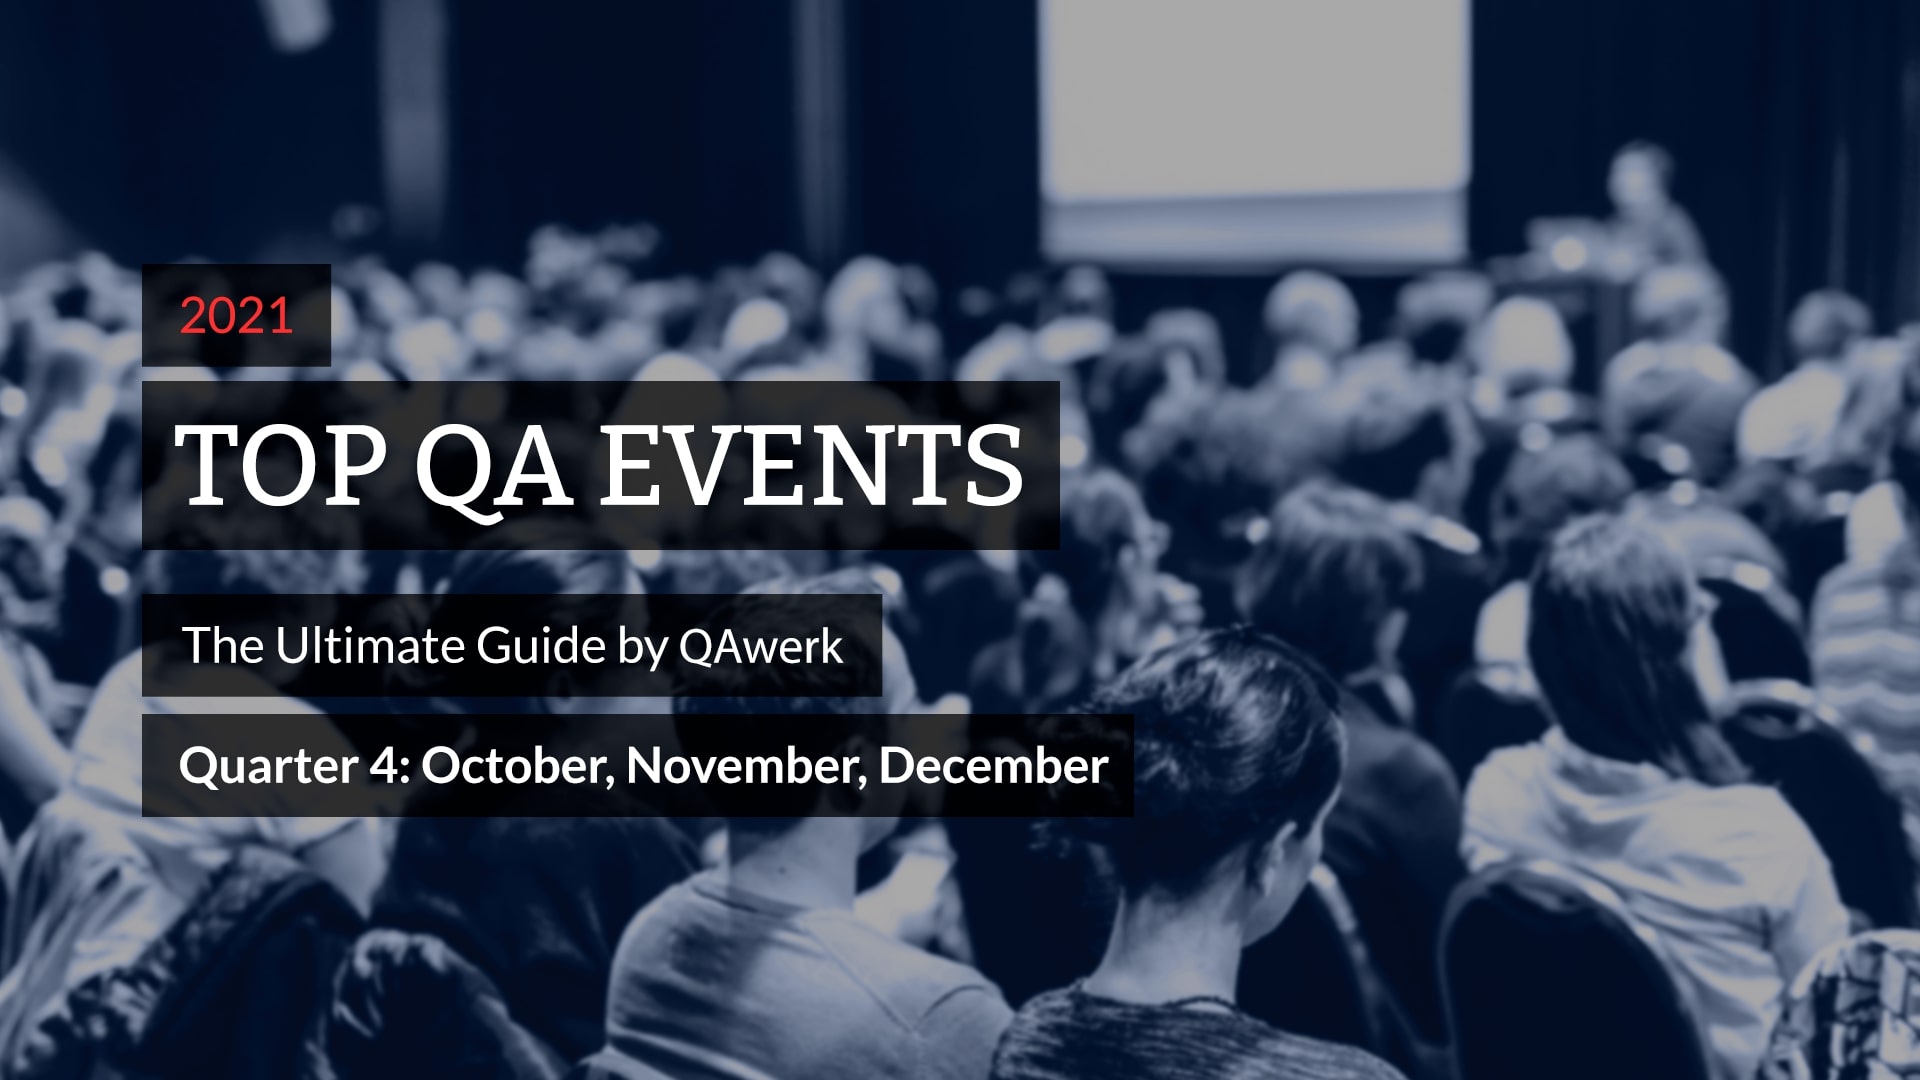 Top QA Events in 2021: Quarter 4 Ultimate Guide